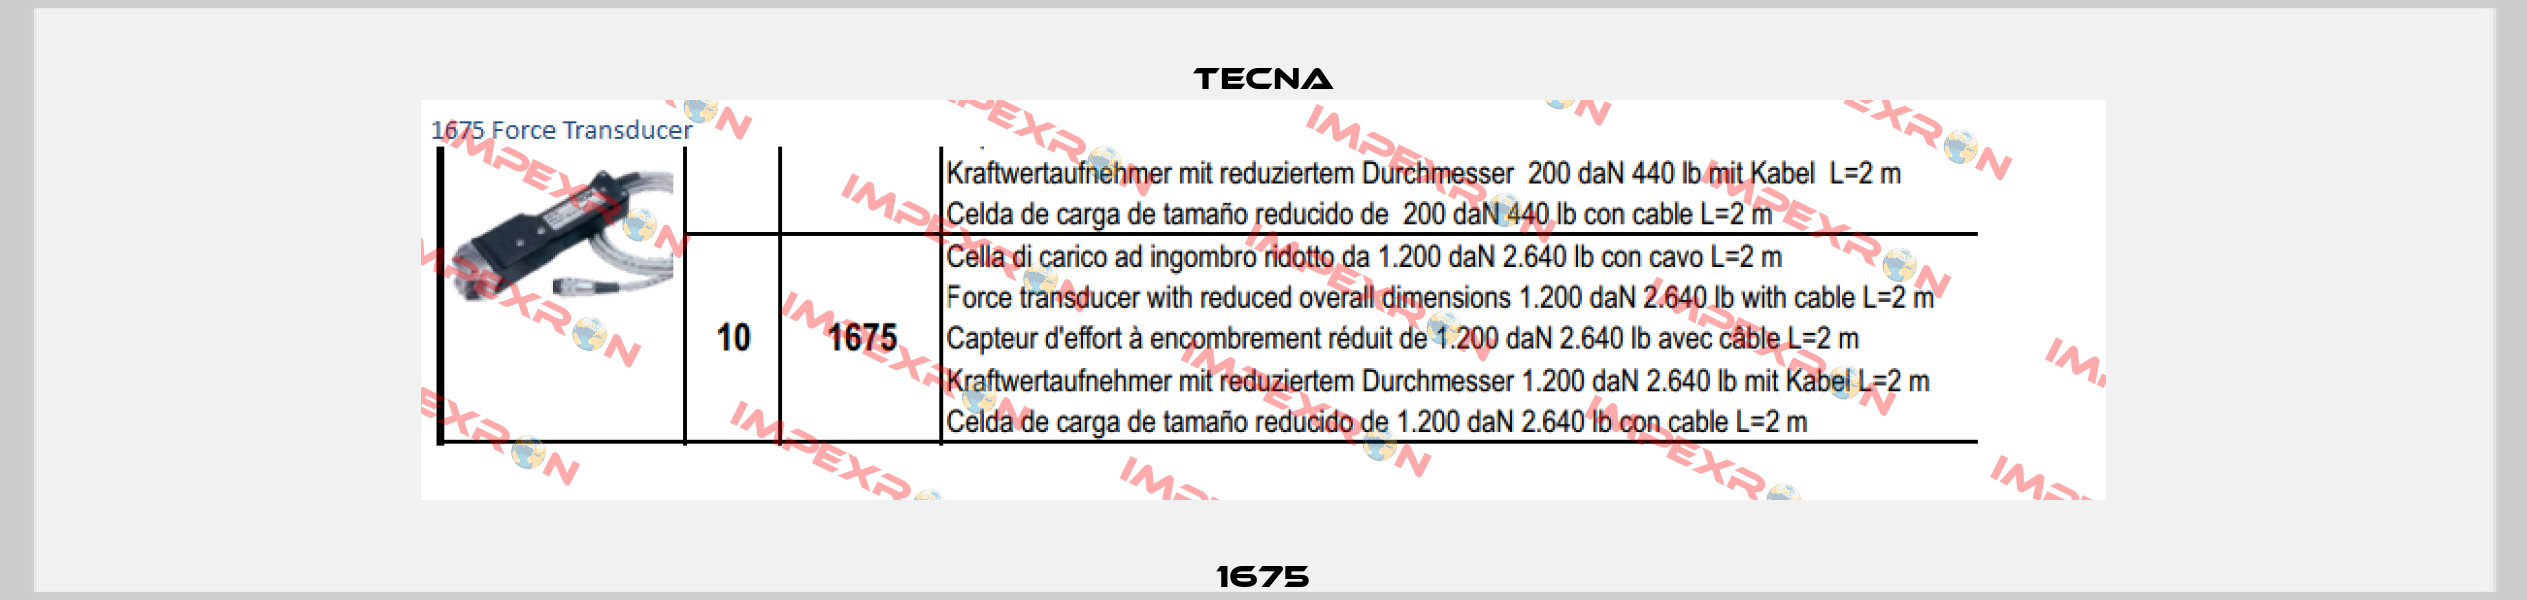 1675 Tecna